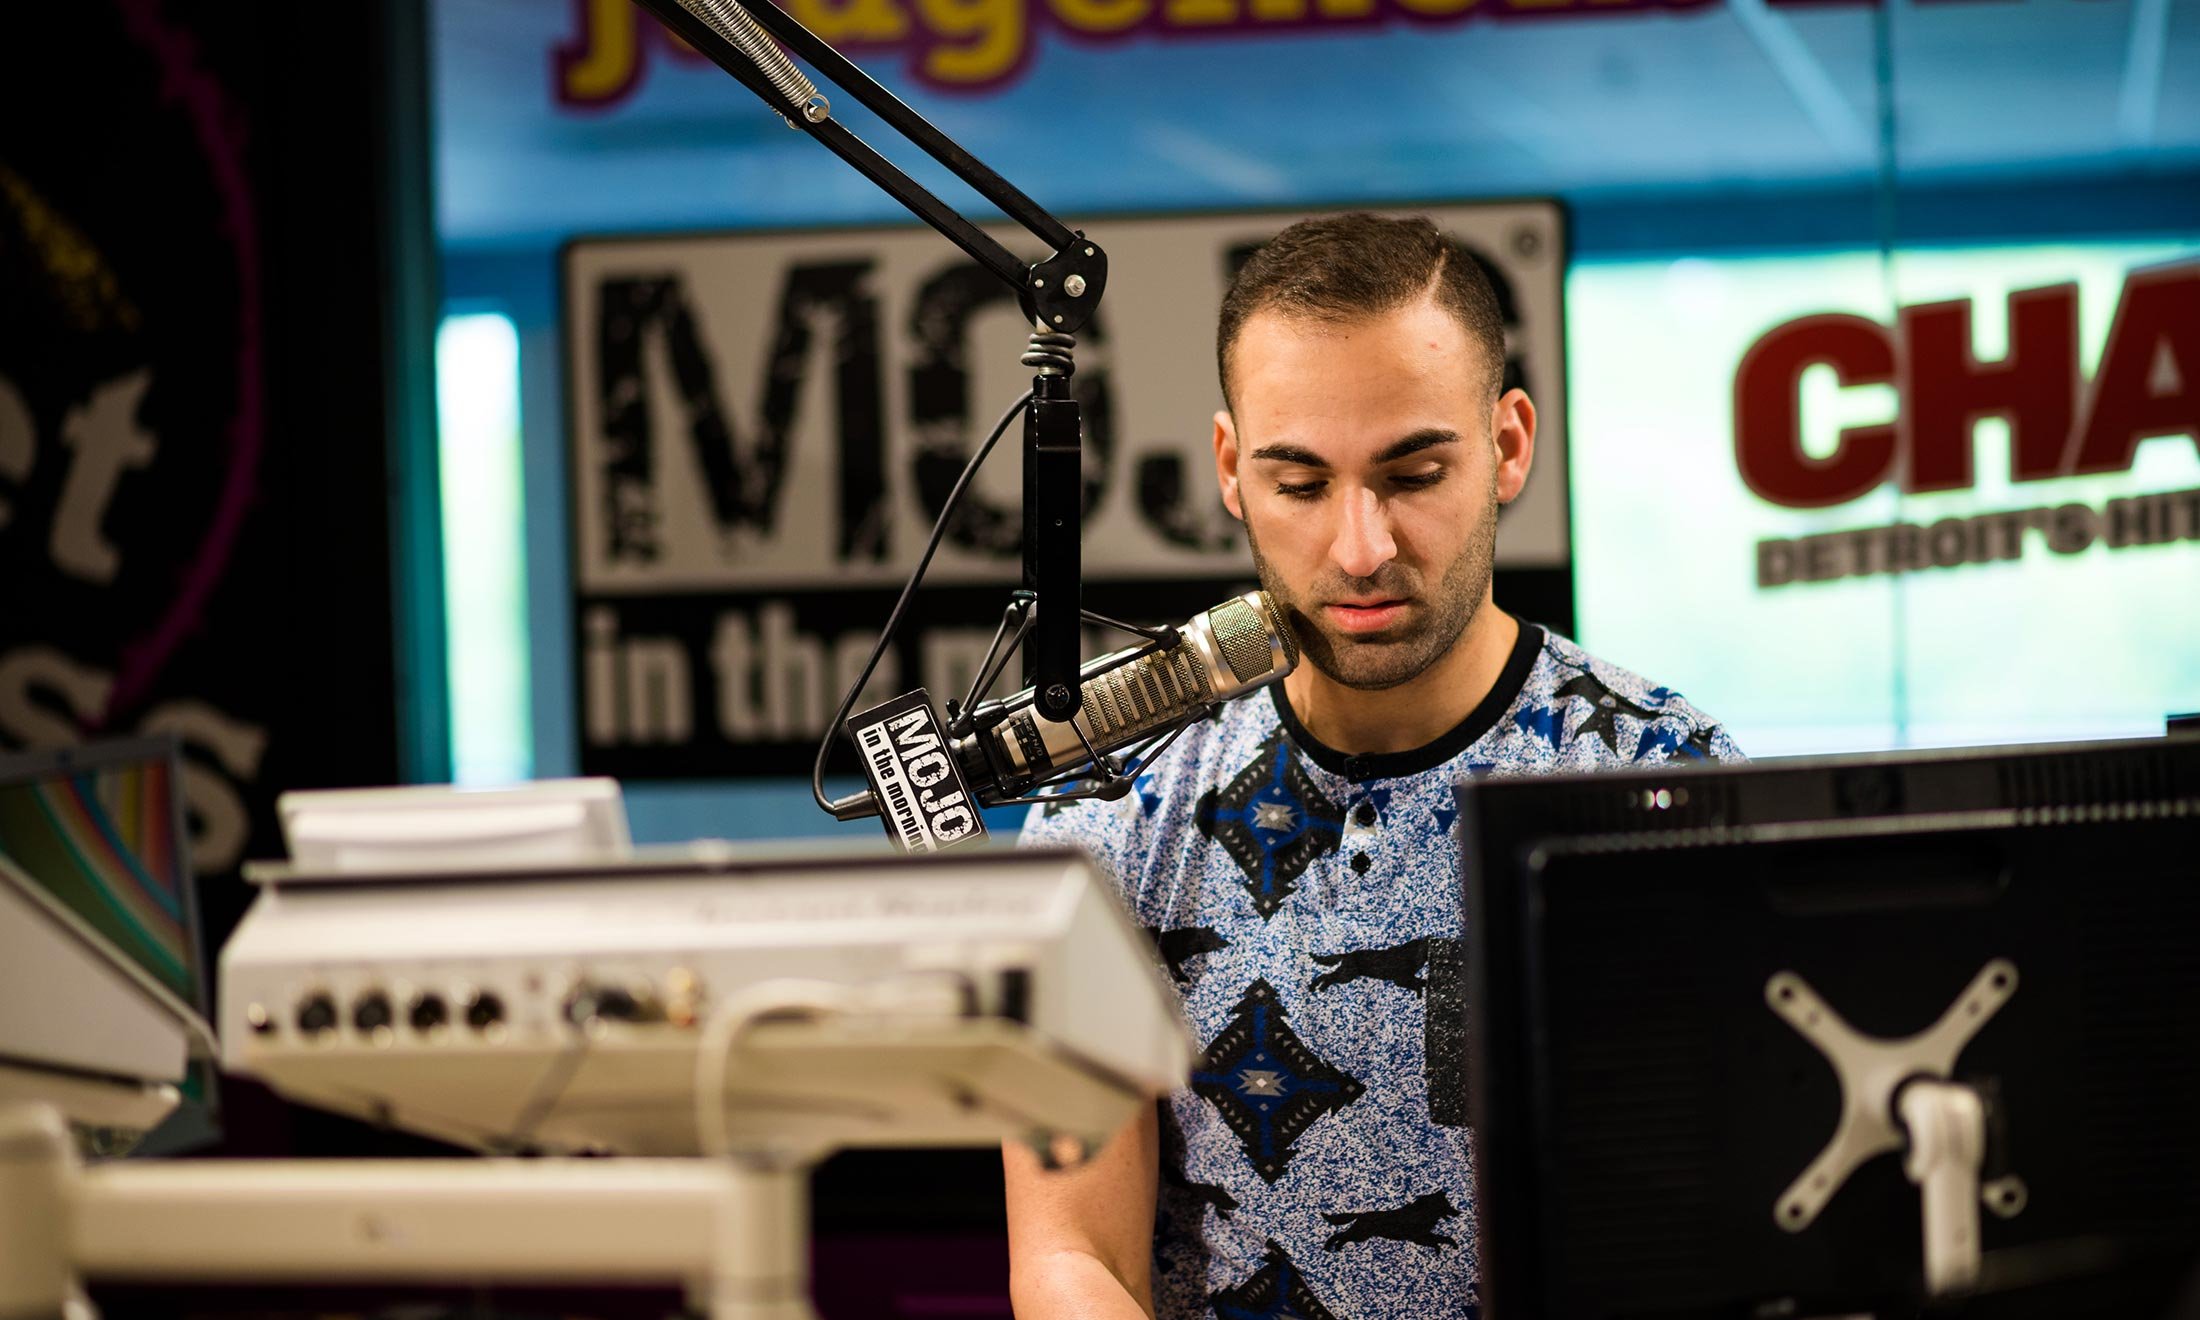 Joe Namou does a sound check in the iHeartRadio studio 